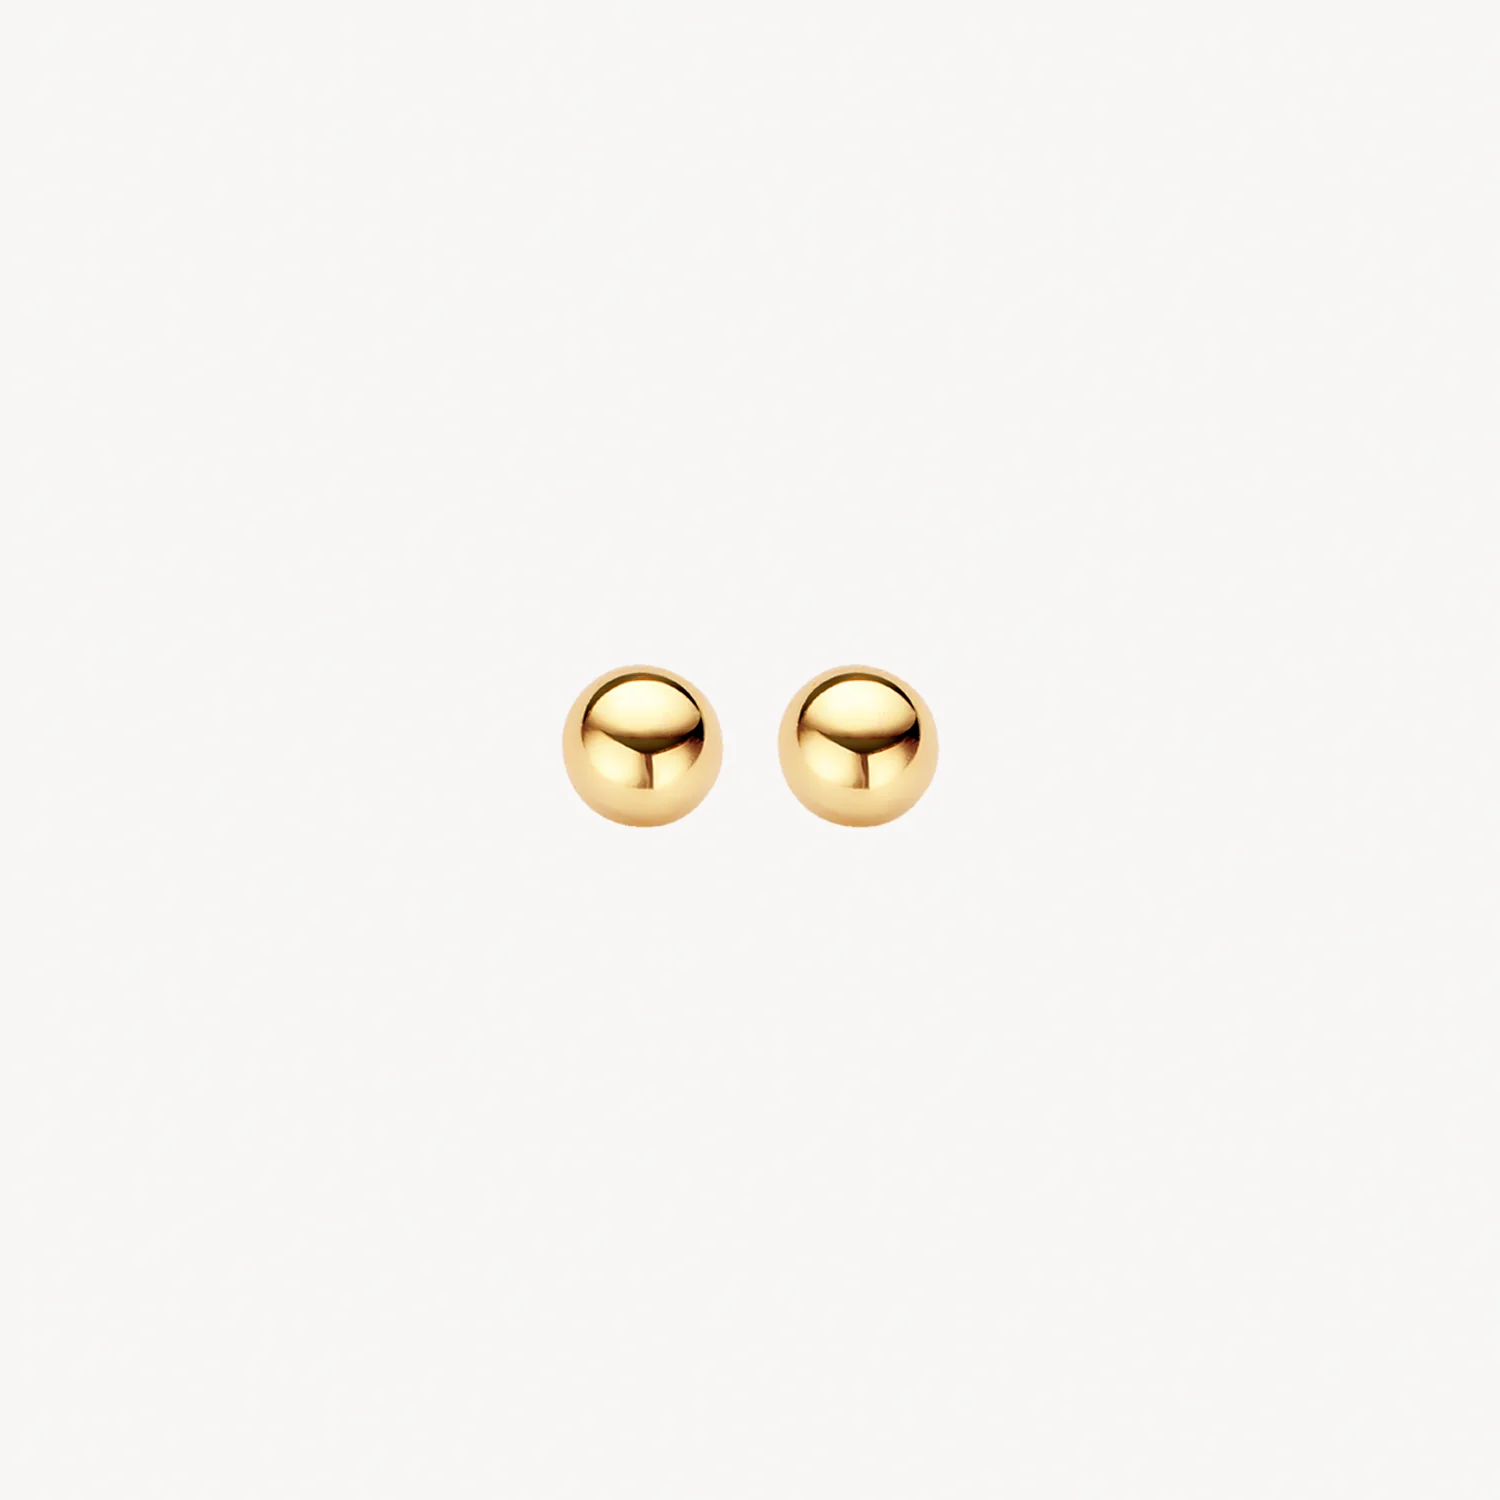 Blush Yellow Gold Ball Stud Earrings - Small